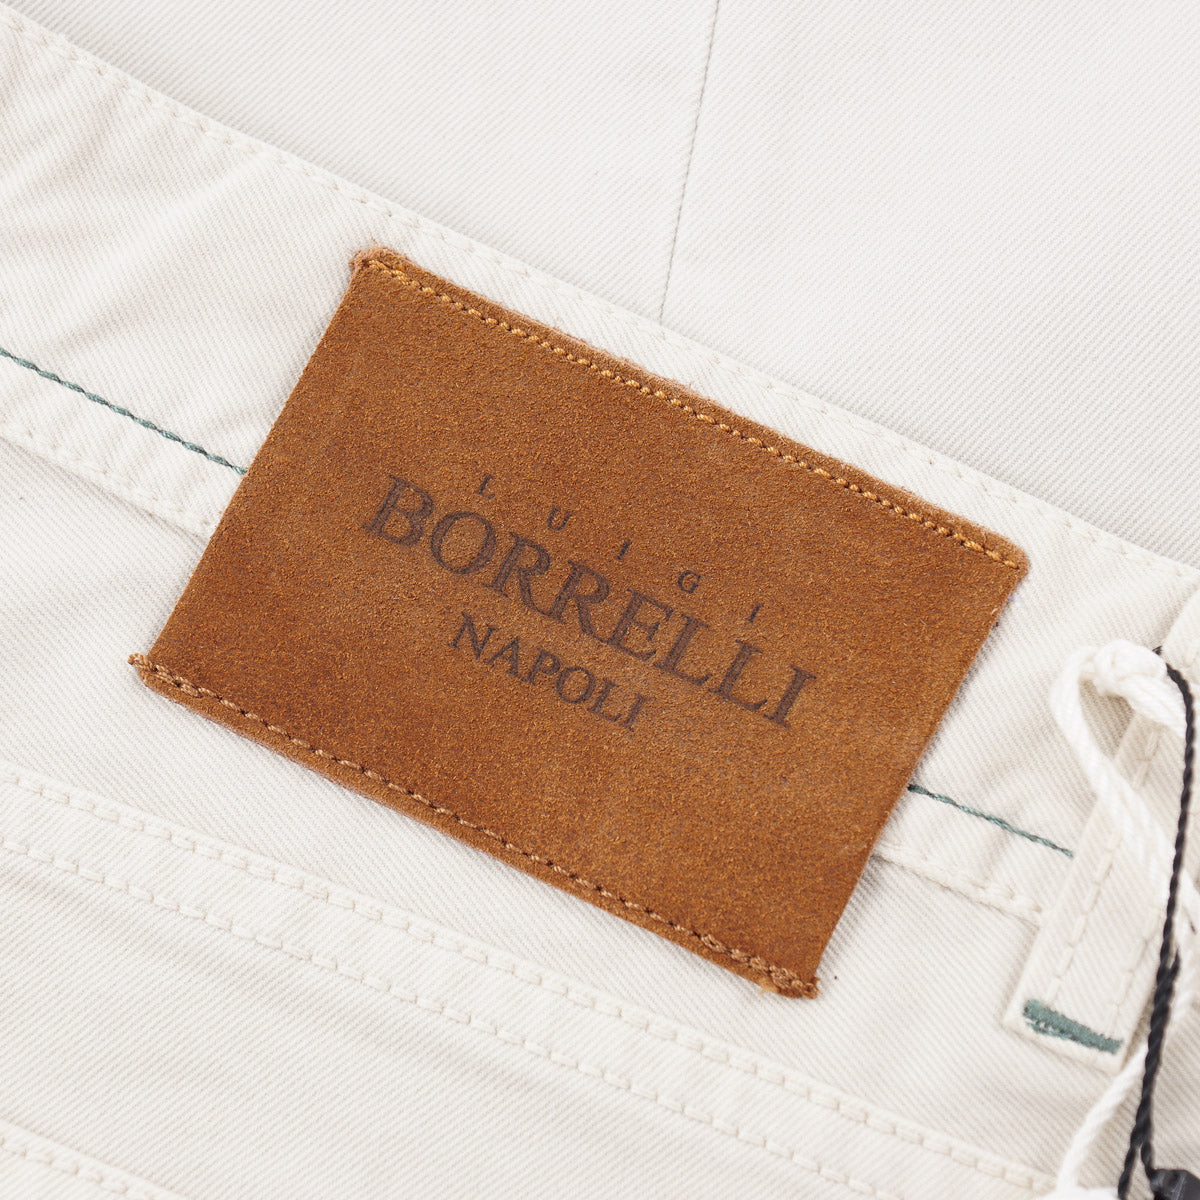 Luigi Borrelli Slim-Fit Denim Jeans - Top Shelf Apparel